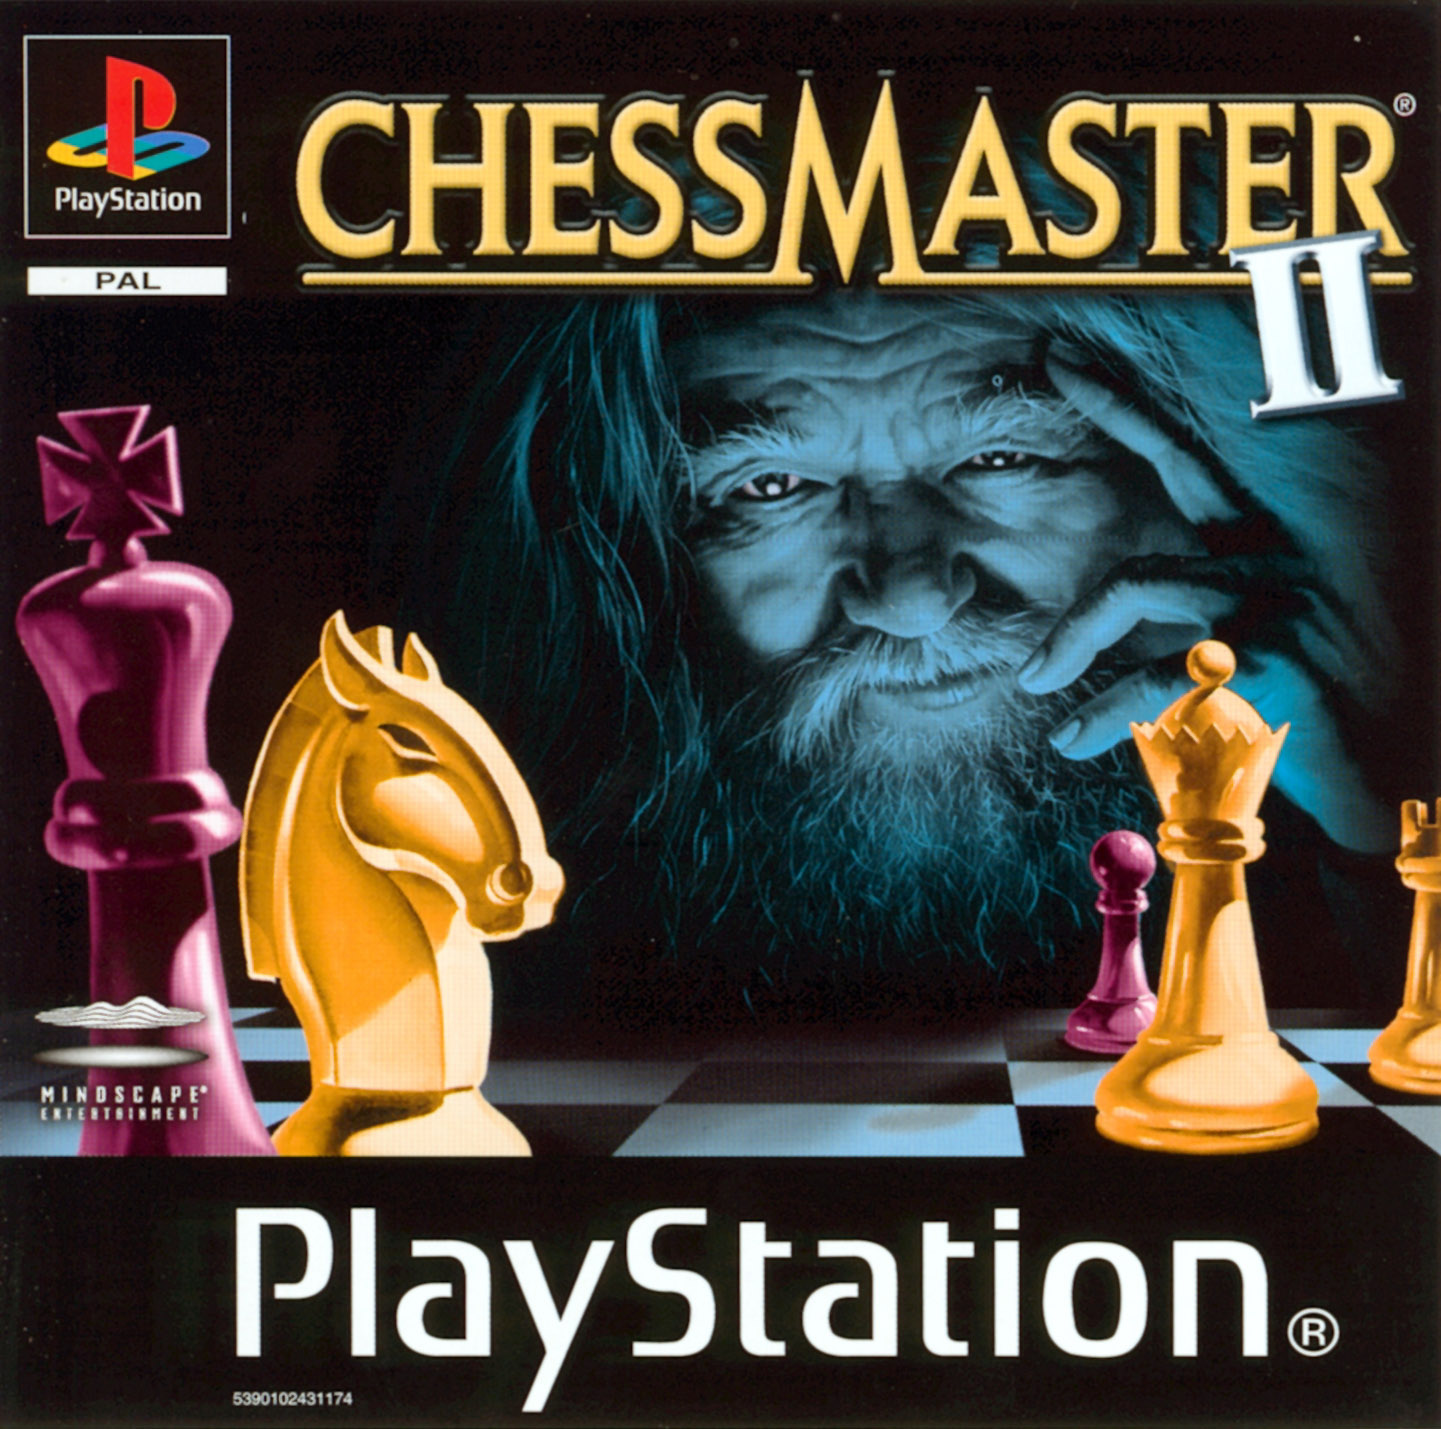 Chessmaster Ii Details Launchbox Games Database